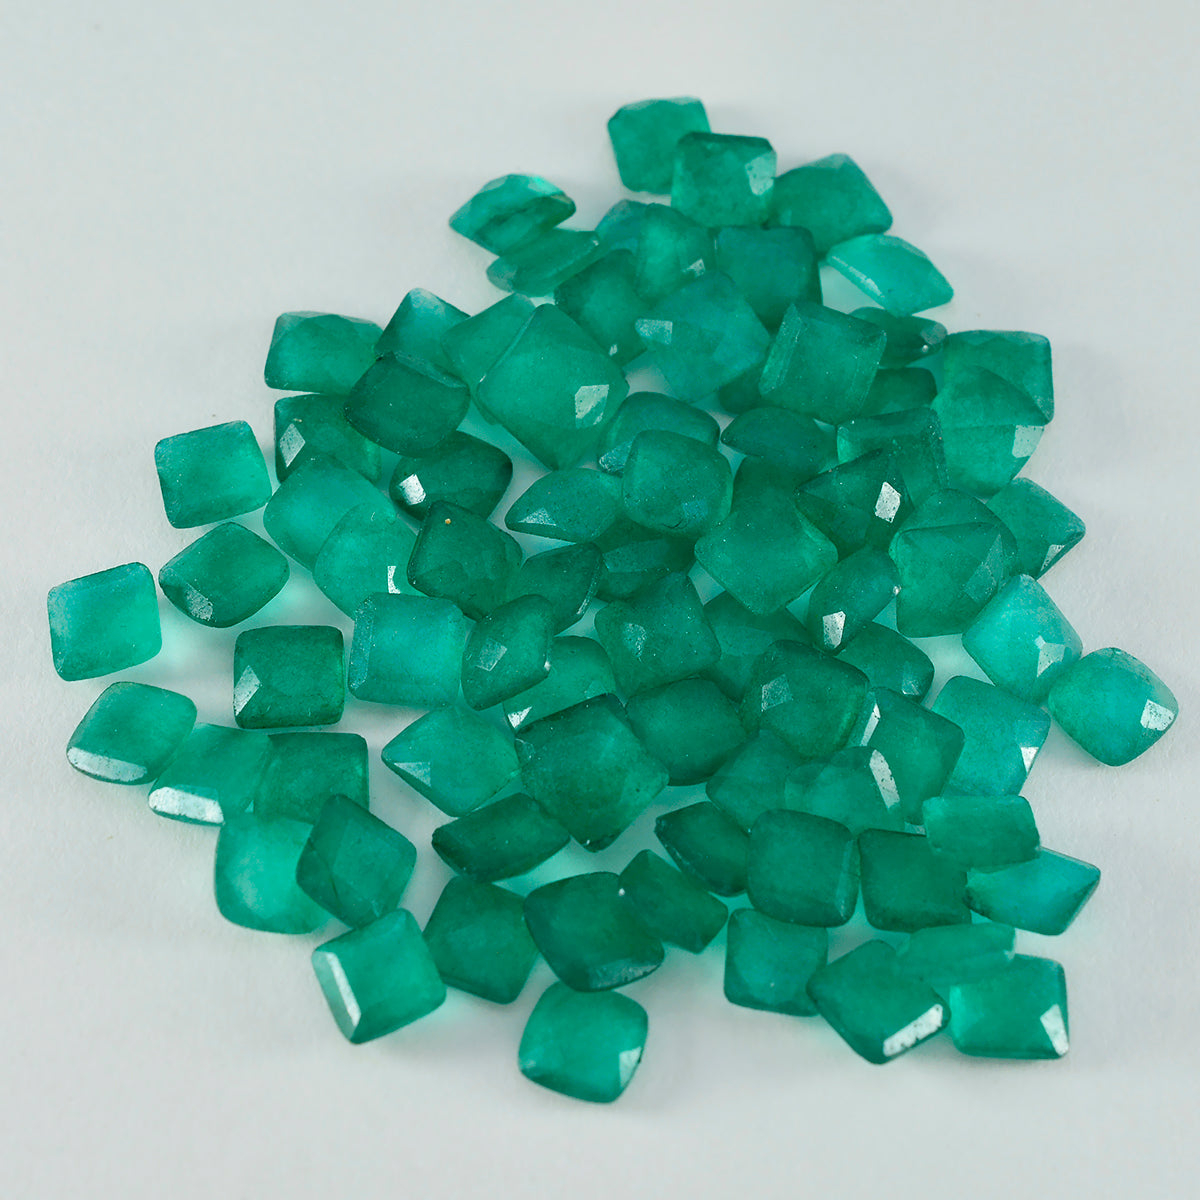 Riyogems 1PC Natural Green Jasper Faceted 6x6 mm Square Shape sweet Quality Gems